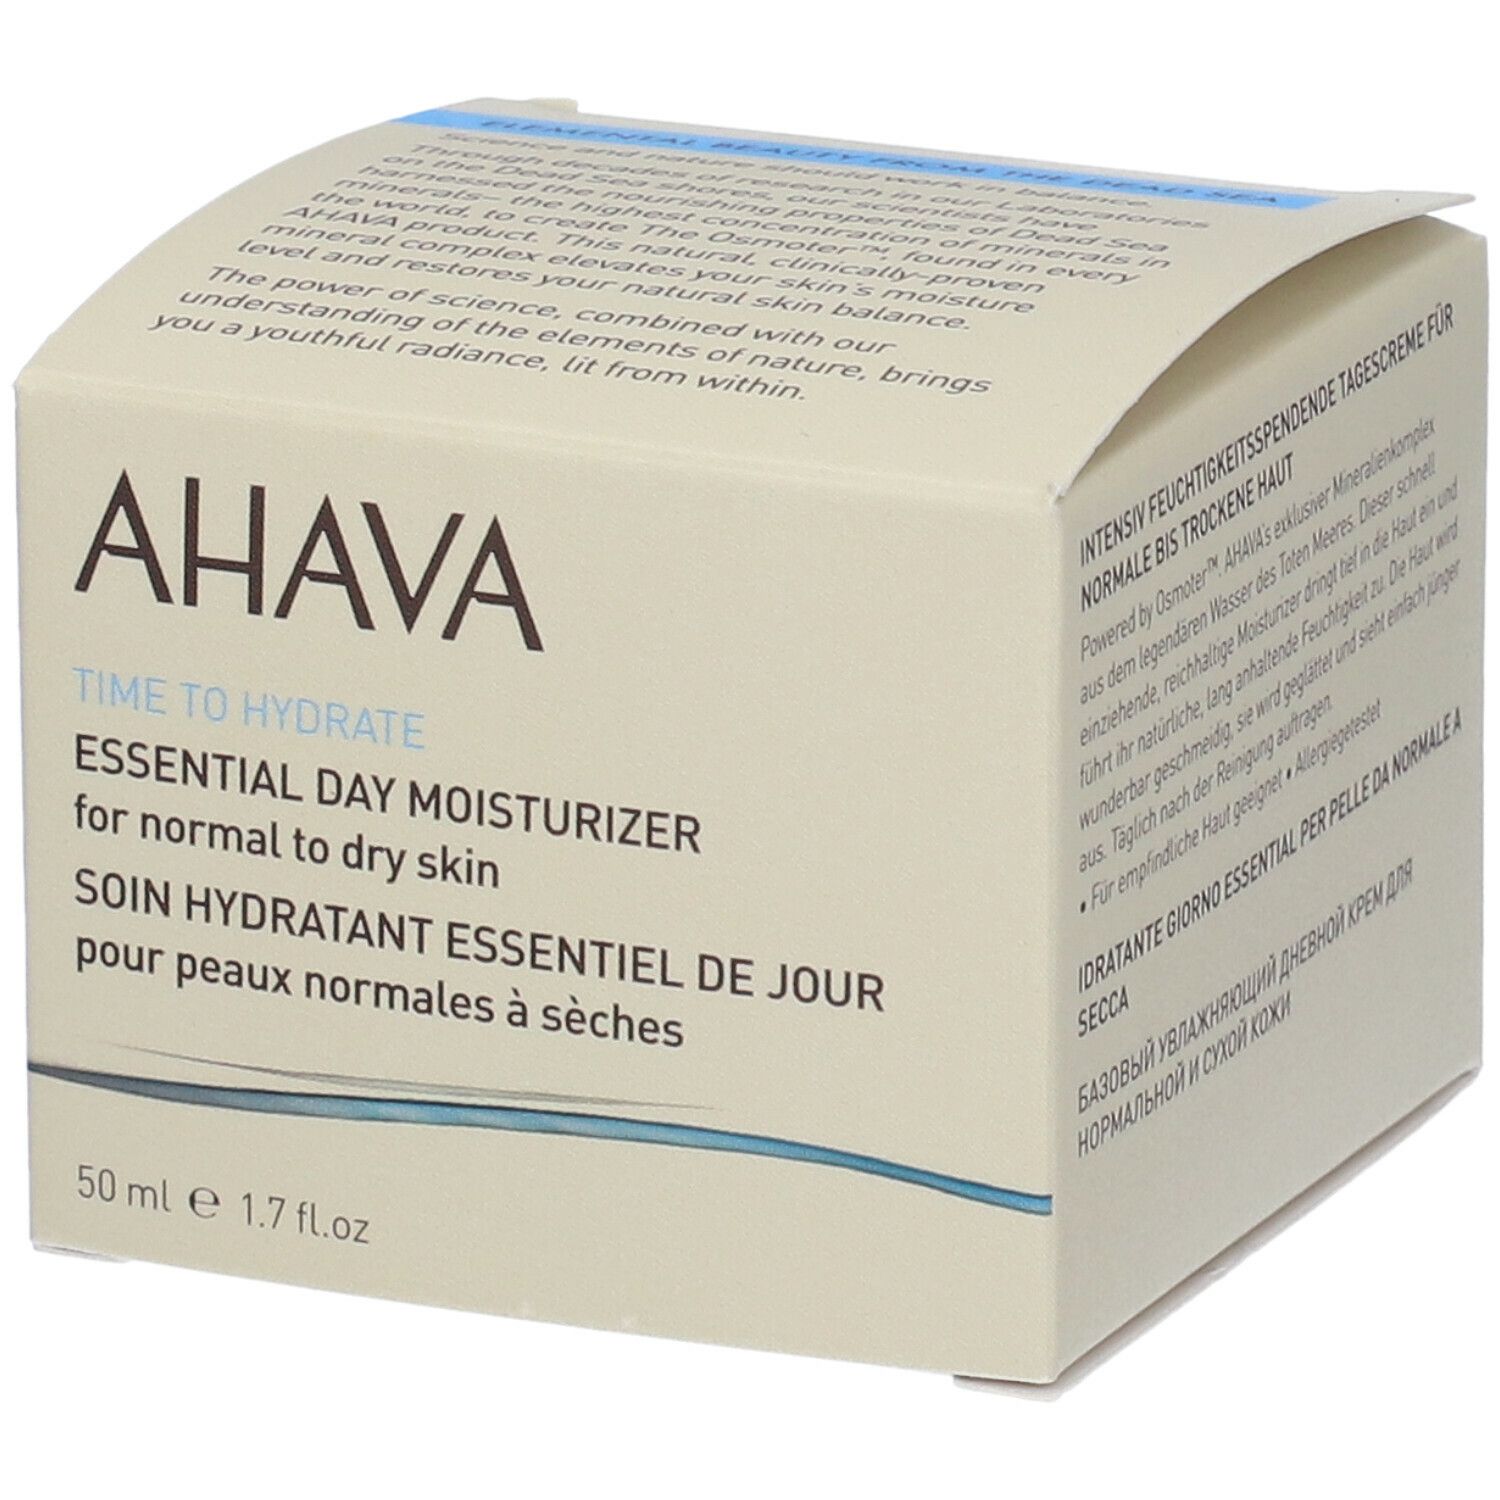 AHAVA Essential Day Moisturizer